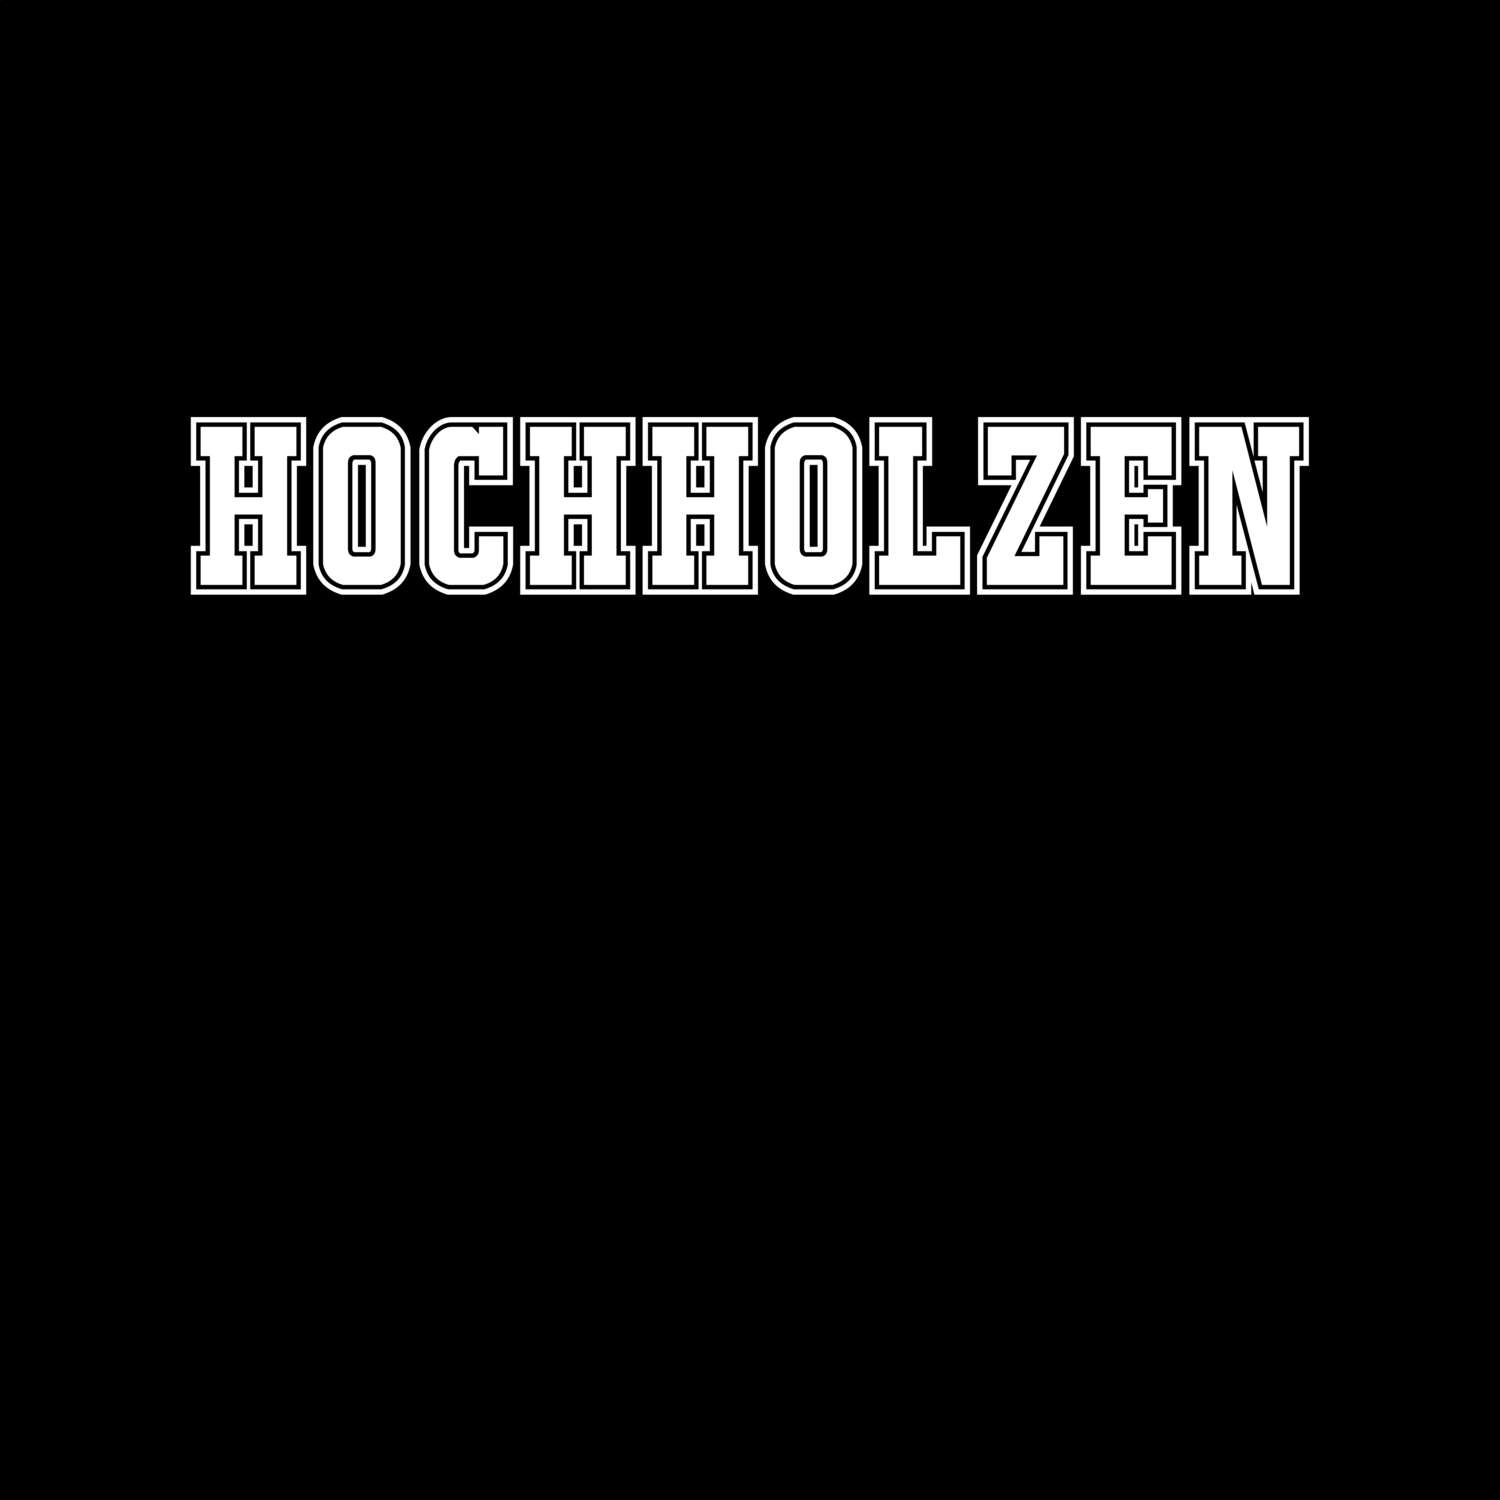 Hochholzen T-Shirt »Classic«